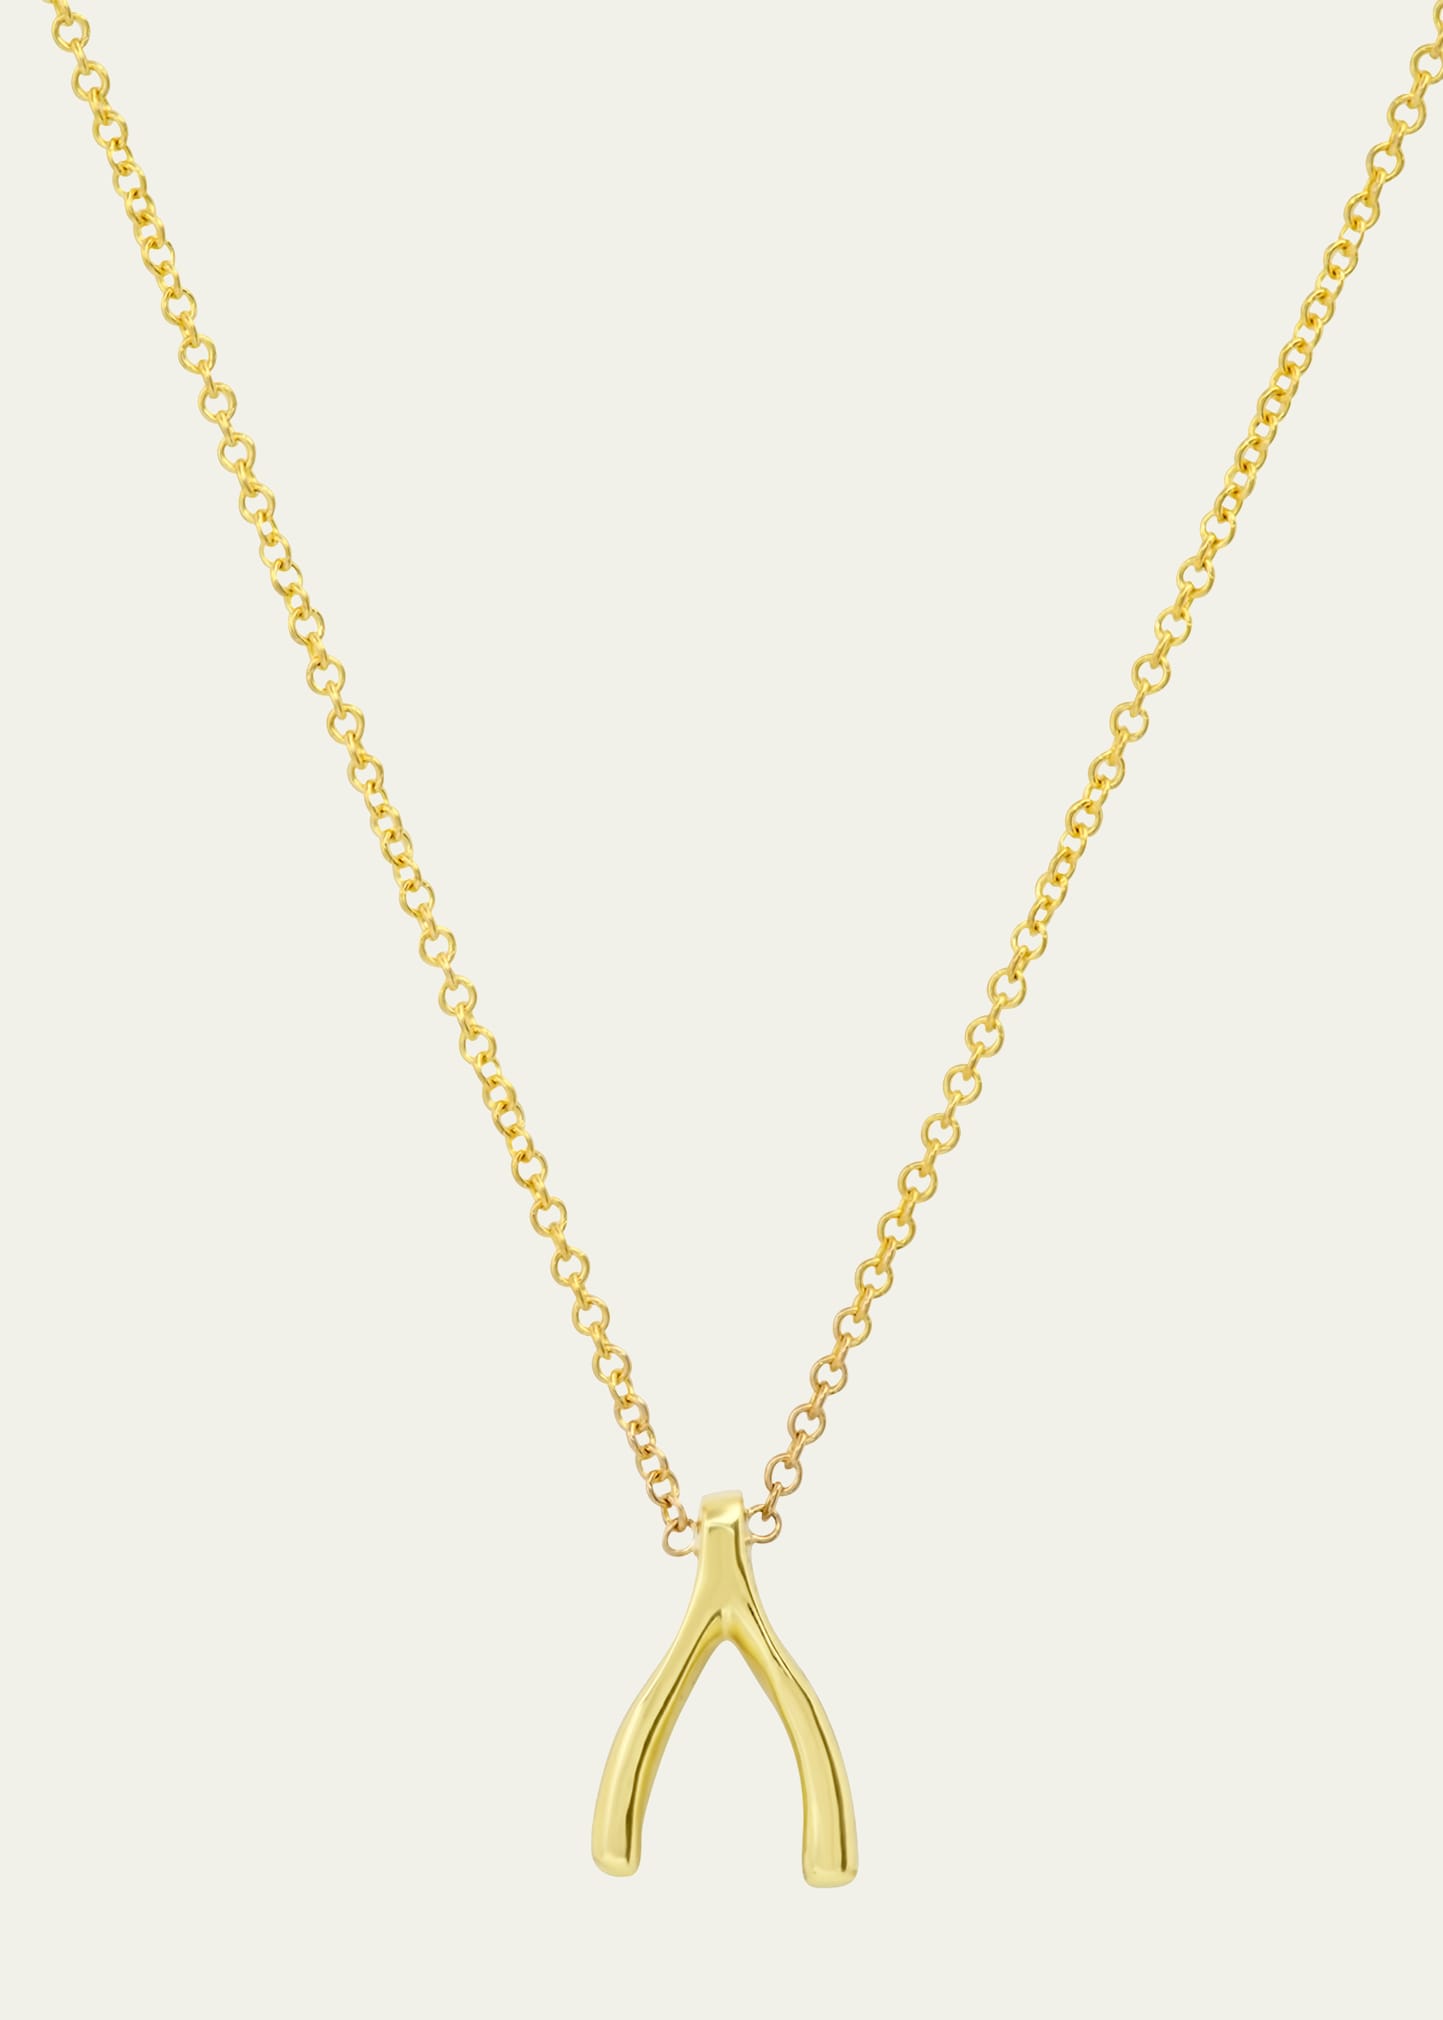 18k Yellow Gold Mini Wishbone Pendant Necklace on 14k Chain